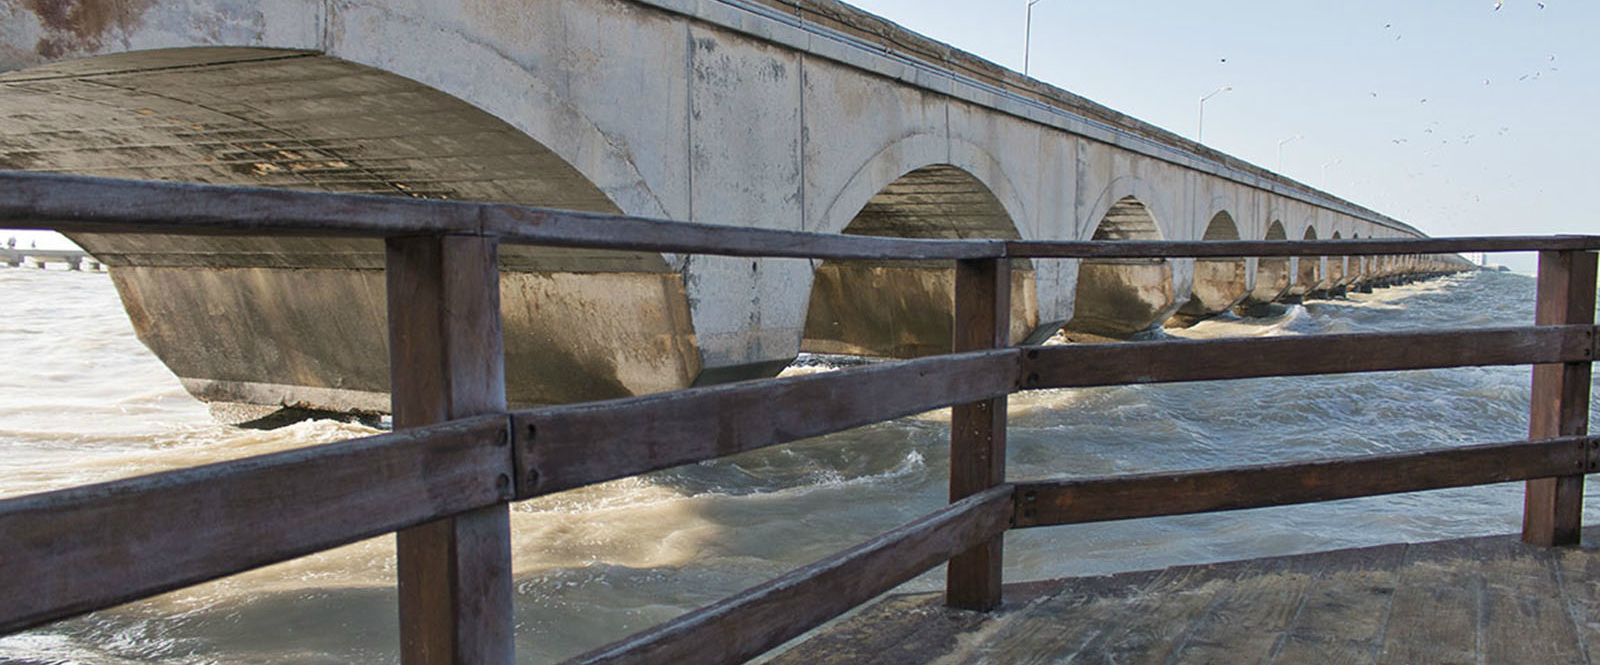 Water Under The Bridge - Property Pros Mexico